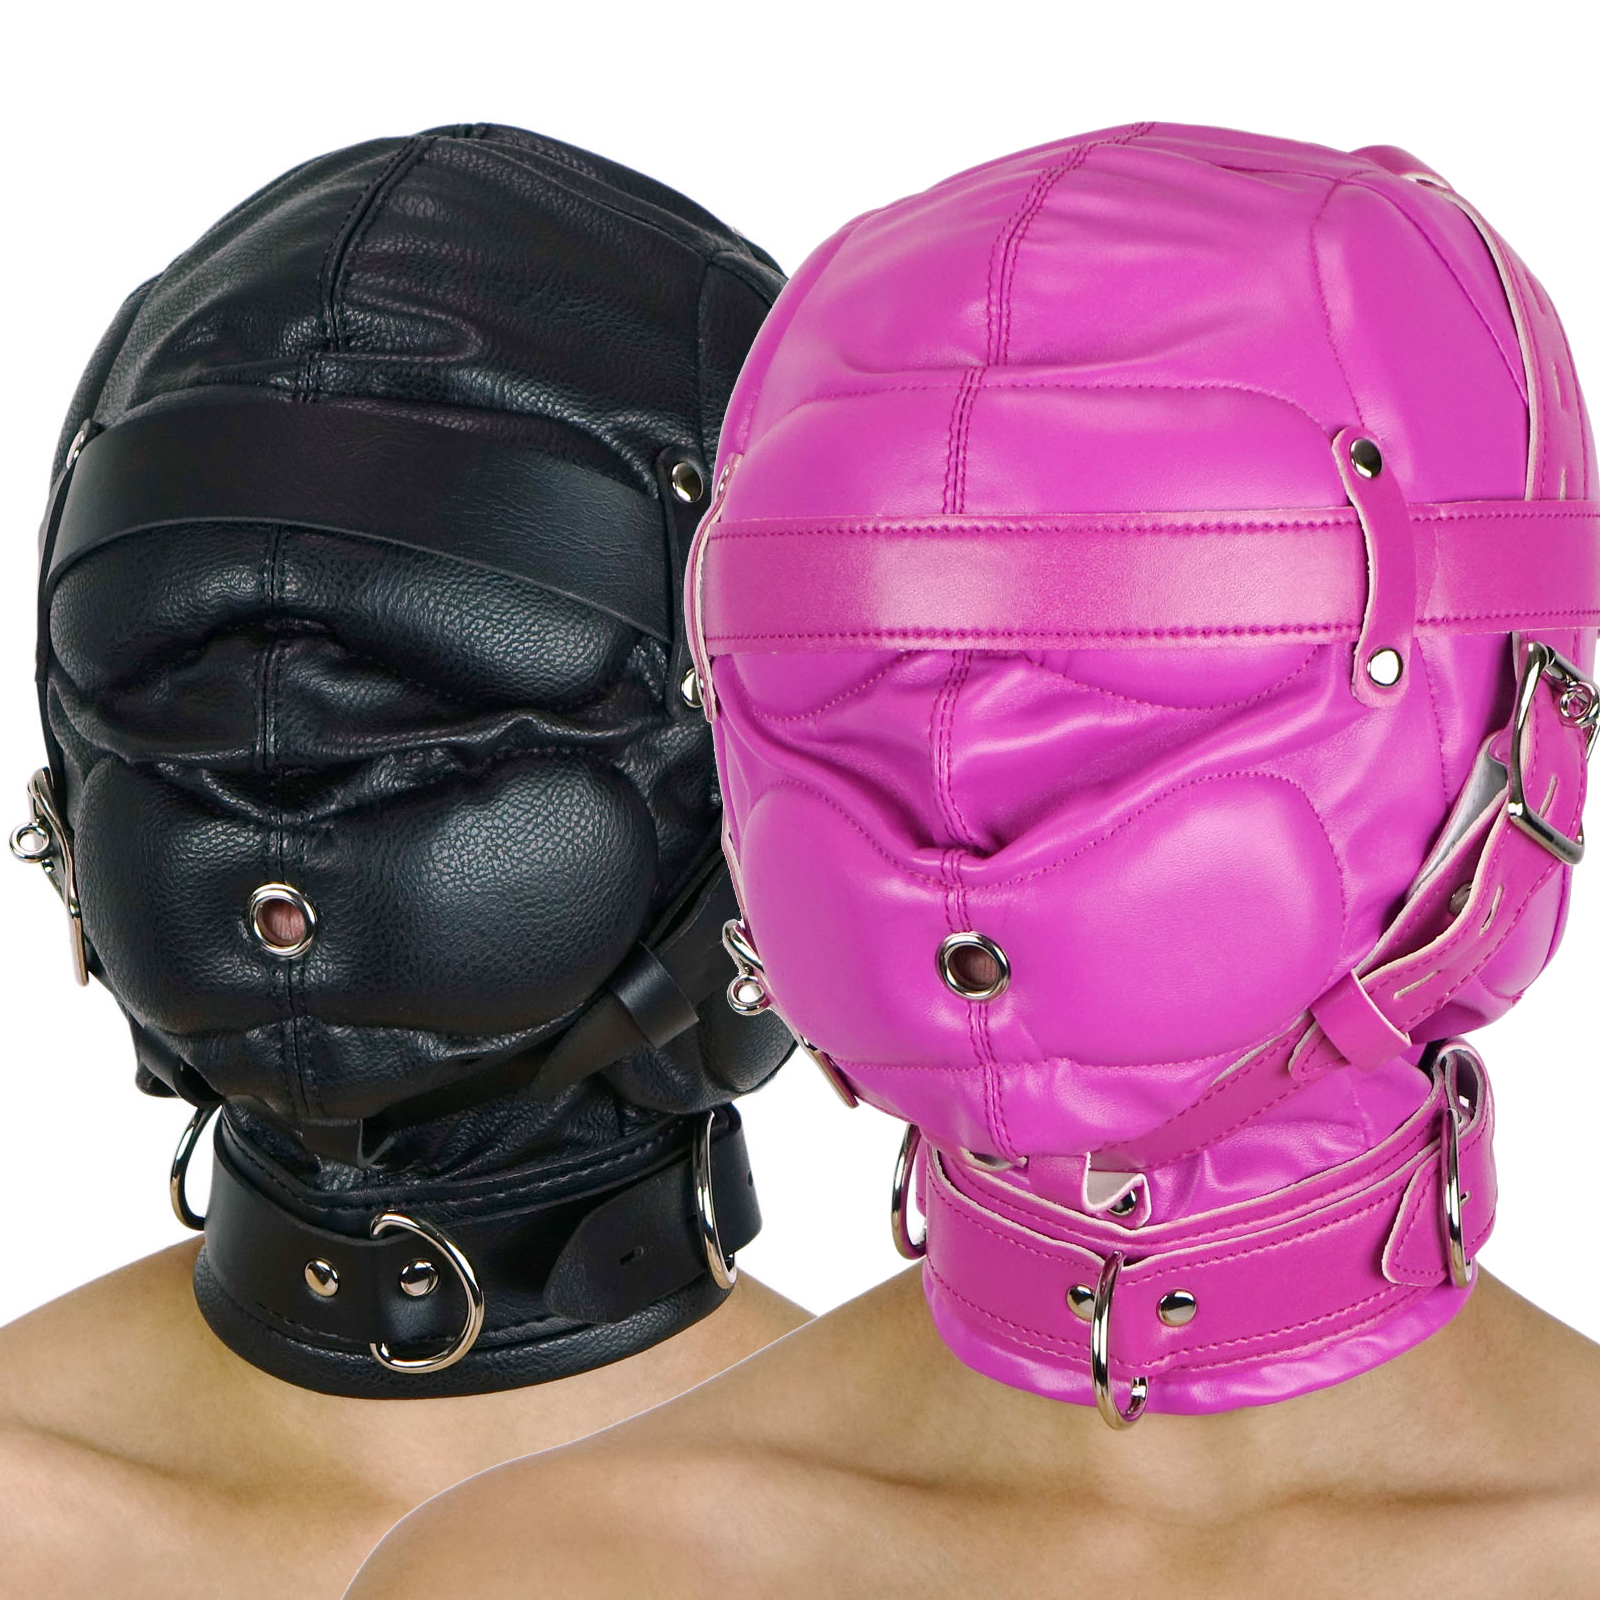 Isolationsmaske schwarz oder pink